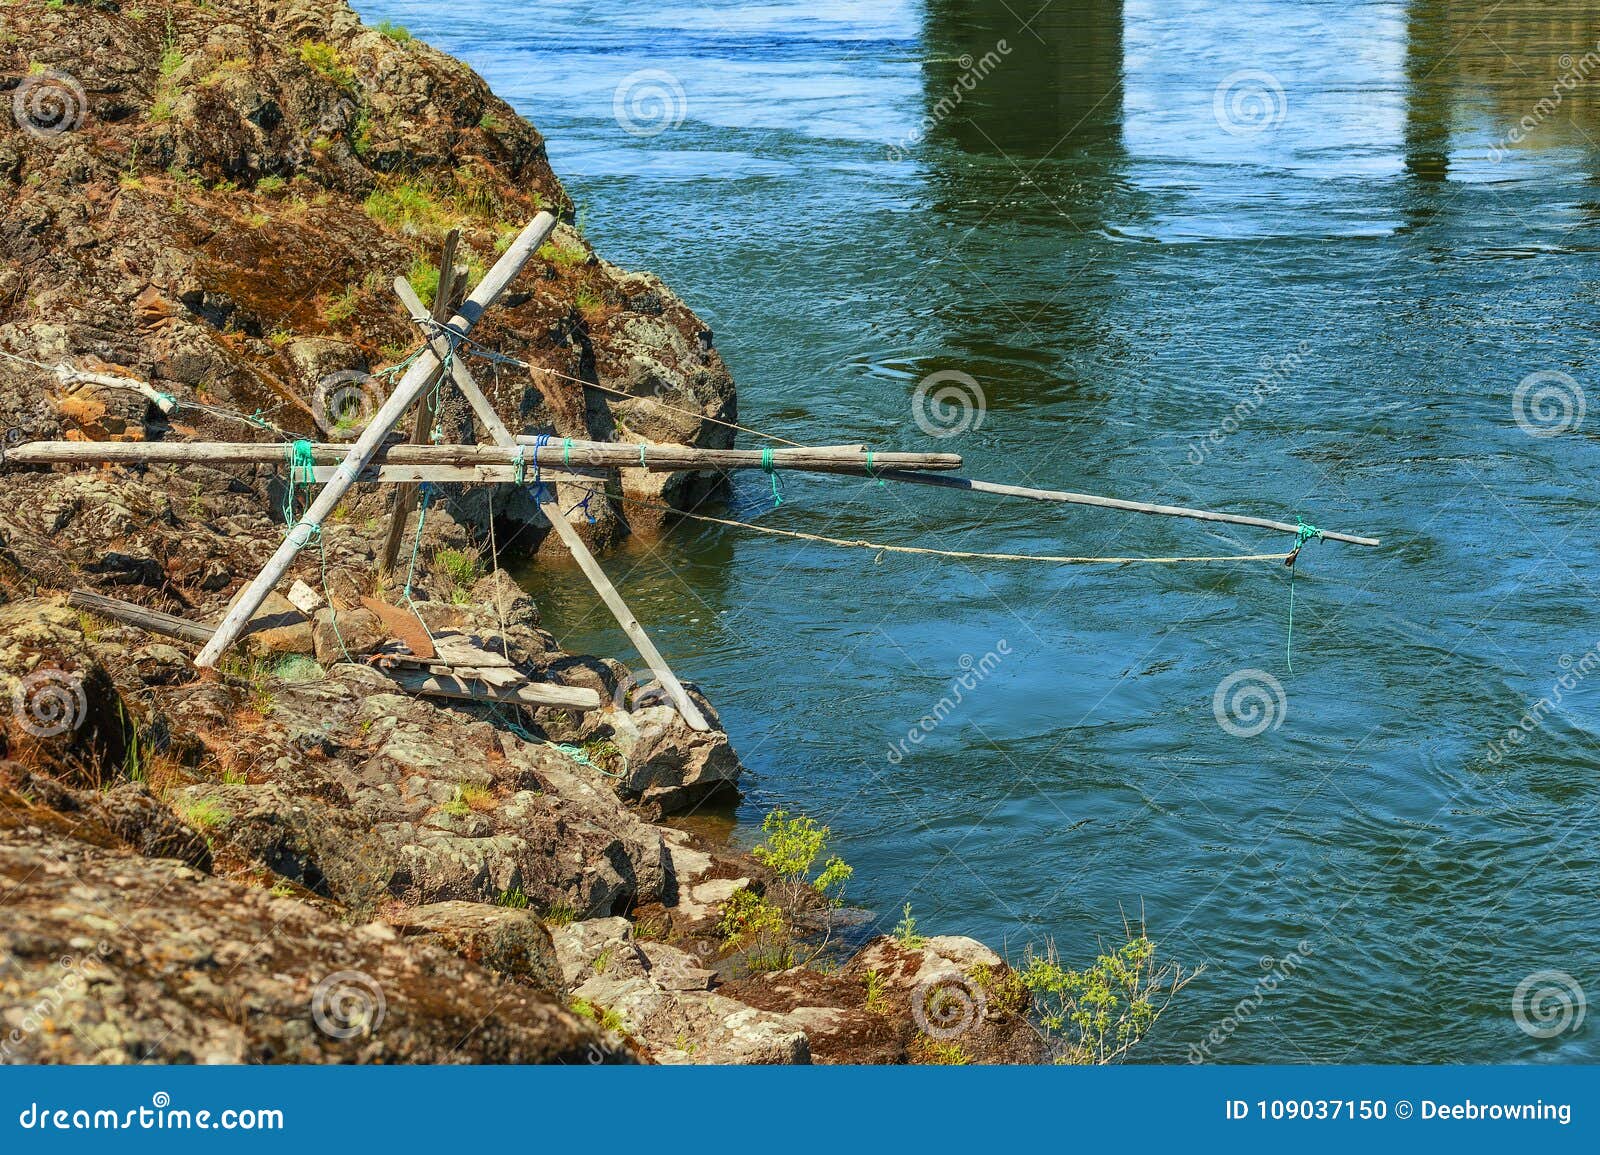 https://thumbs.dreamstime.com/z/indian-fishing-platforms-columbia-river-fishing-platforms-indians-use-to-net-fish-dalles-oregon-along-columbia-109037150.jpg